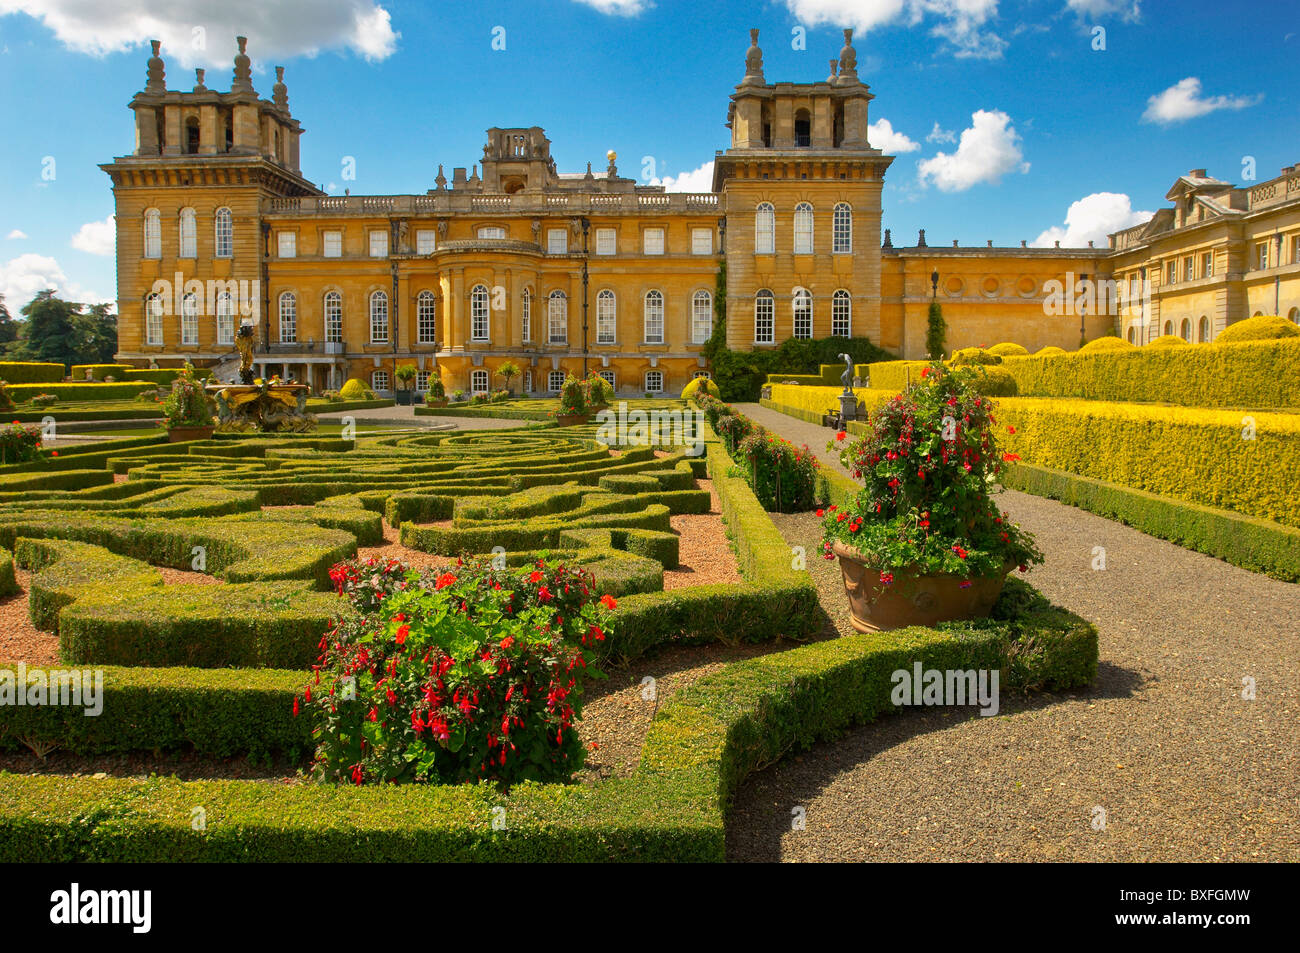 Blenheim Palace Italian Garden with geometric hedge designs- England Stock Photo